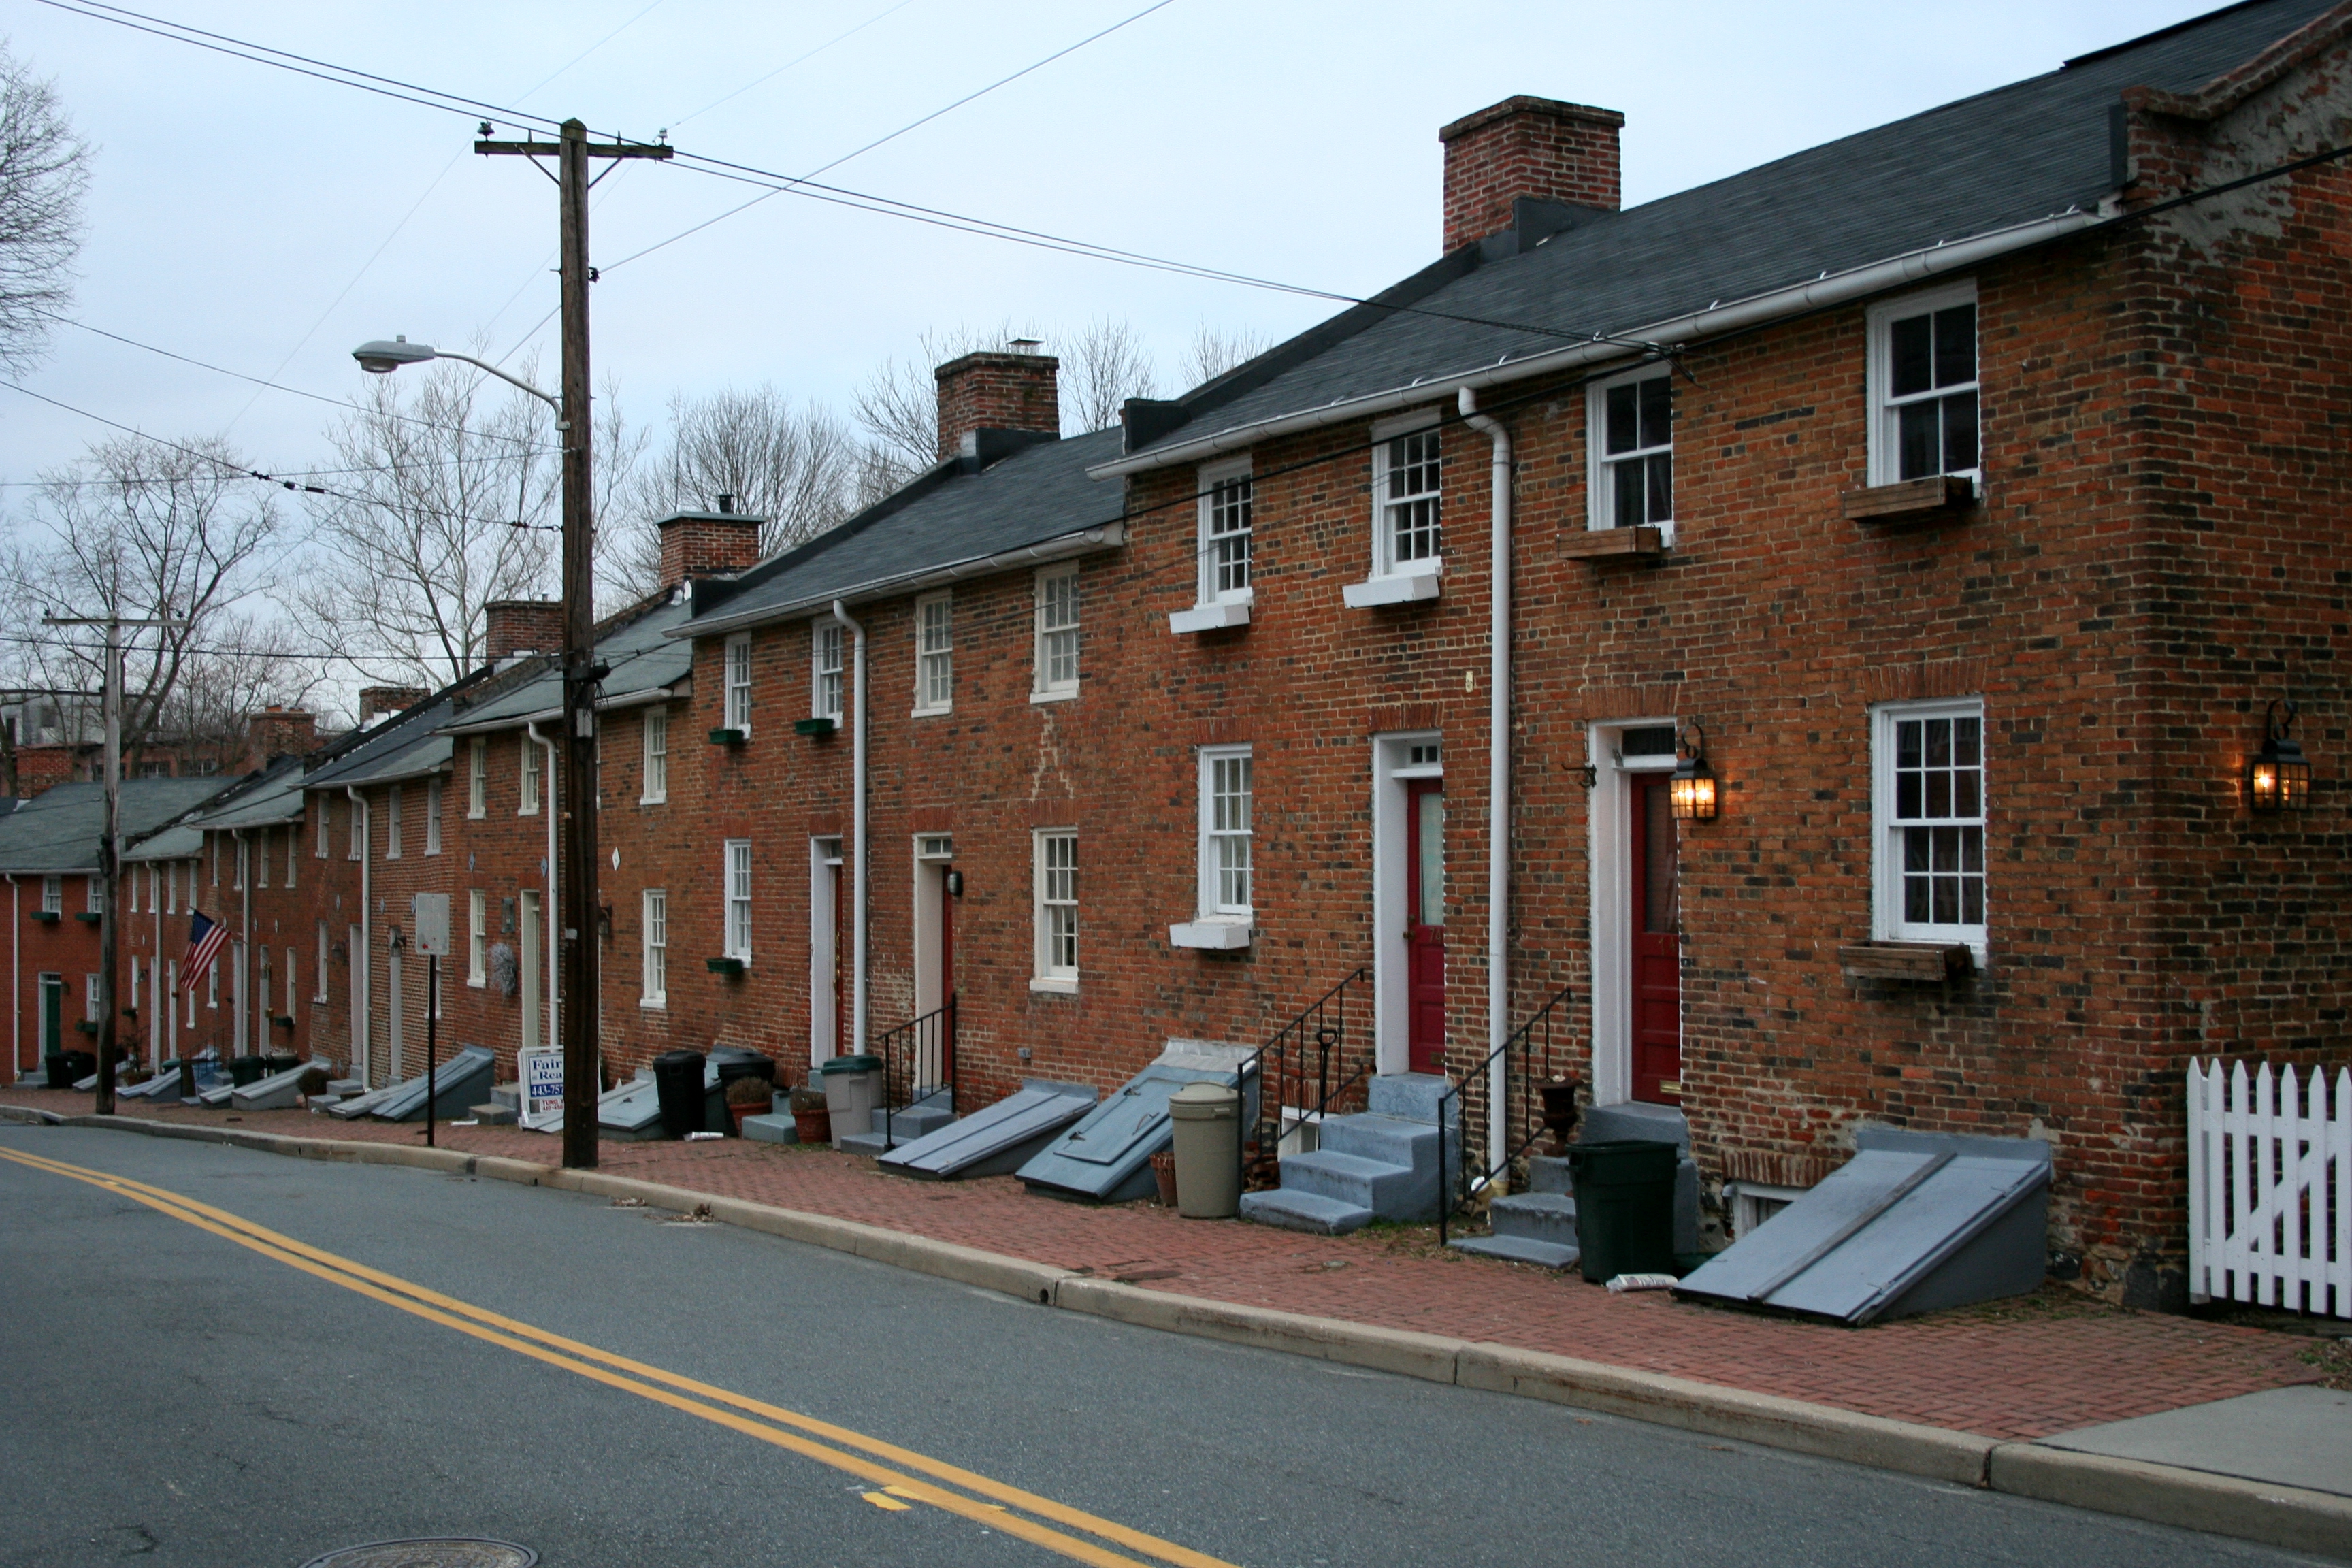 File:Oella MD row houses.jpg - Wikimedia Commons